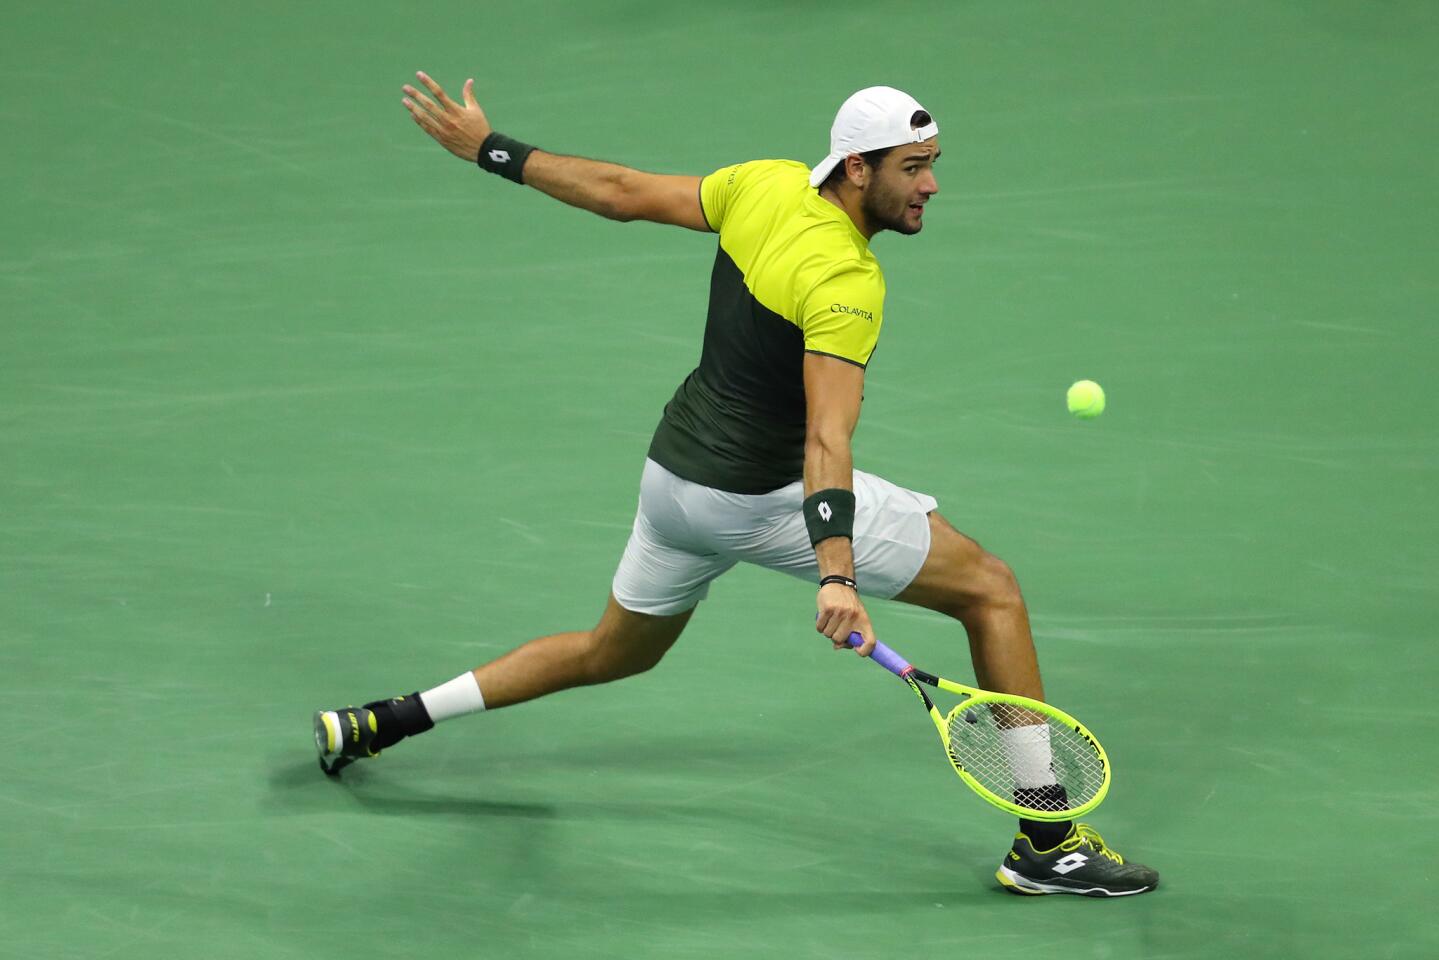 Matteo Berrettini returns a shot during his Men's Singles semifinal match against Rafael Nadal inside the Billie Jean King National Tennis Center on Sept. 6, 2019, in Queens.